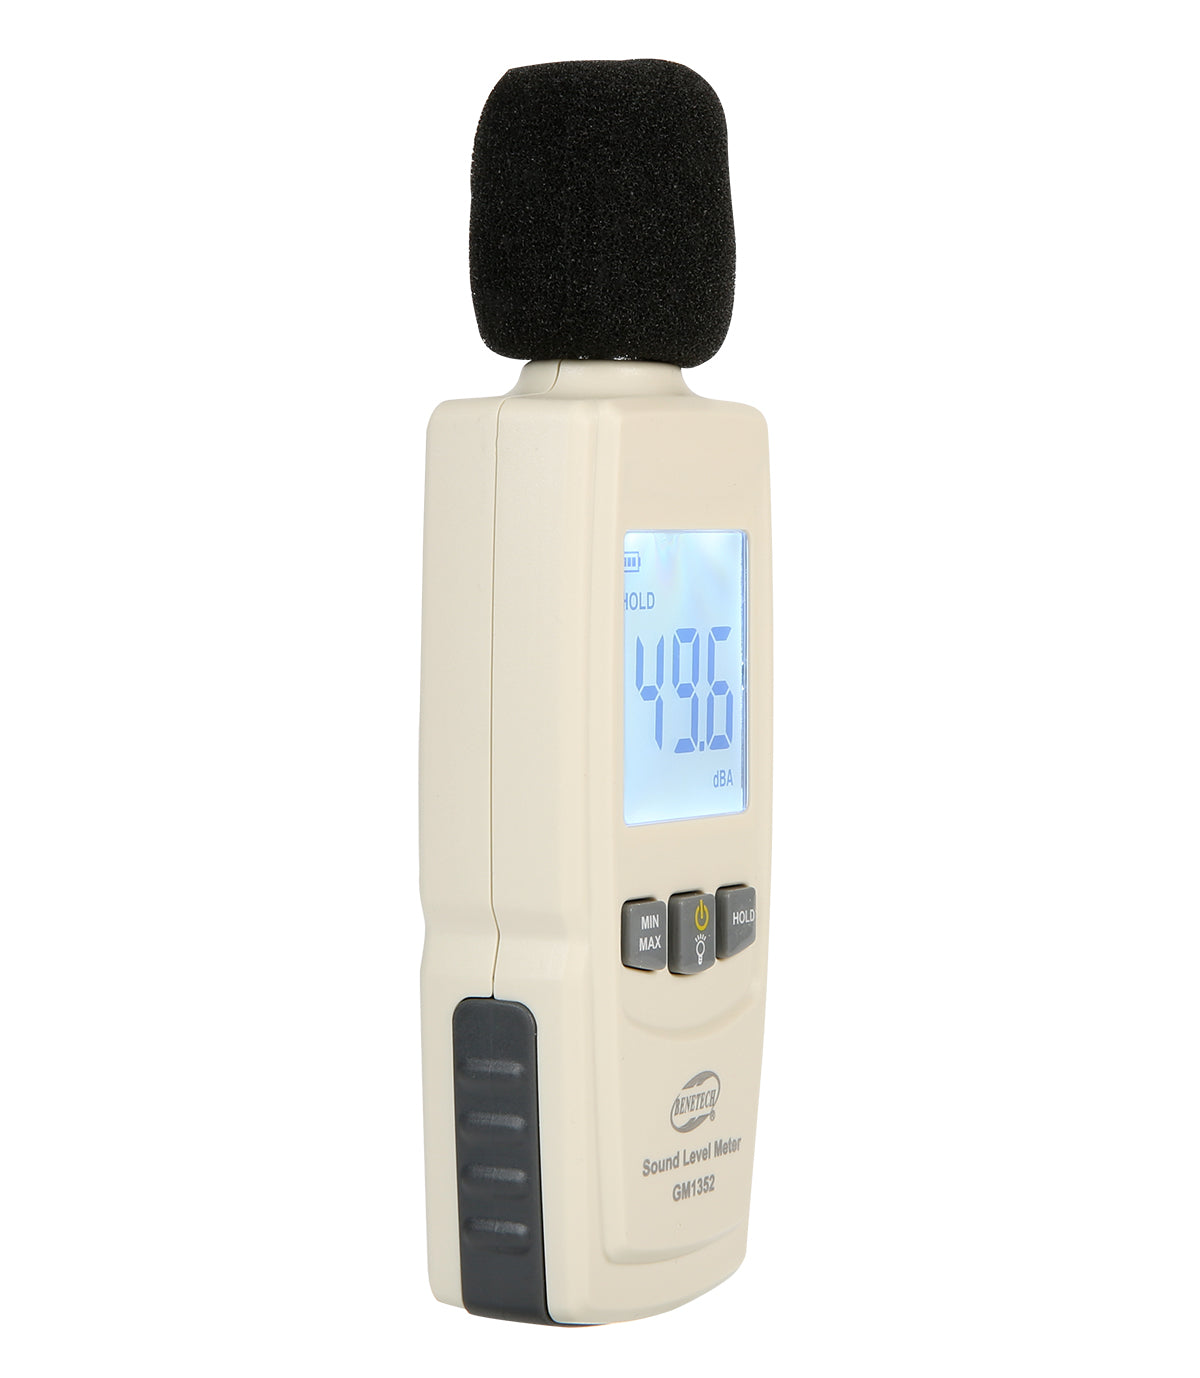 Benetch GM1352 Sound Decibel Level Meter